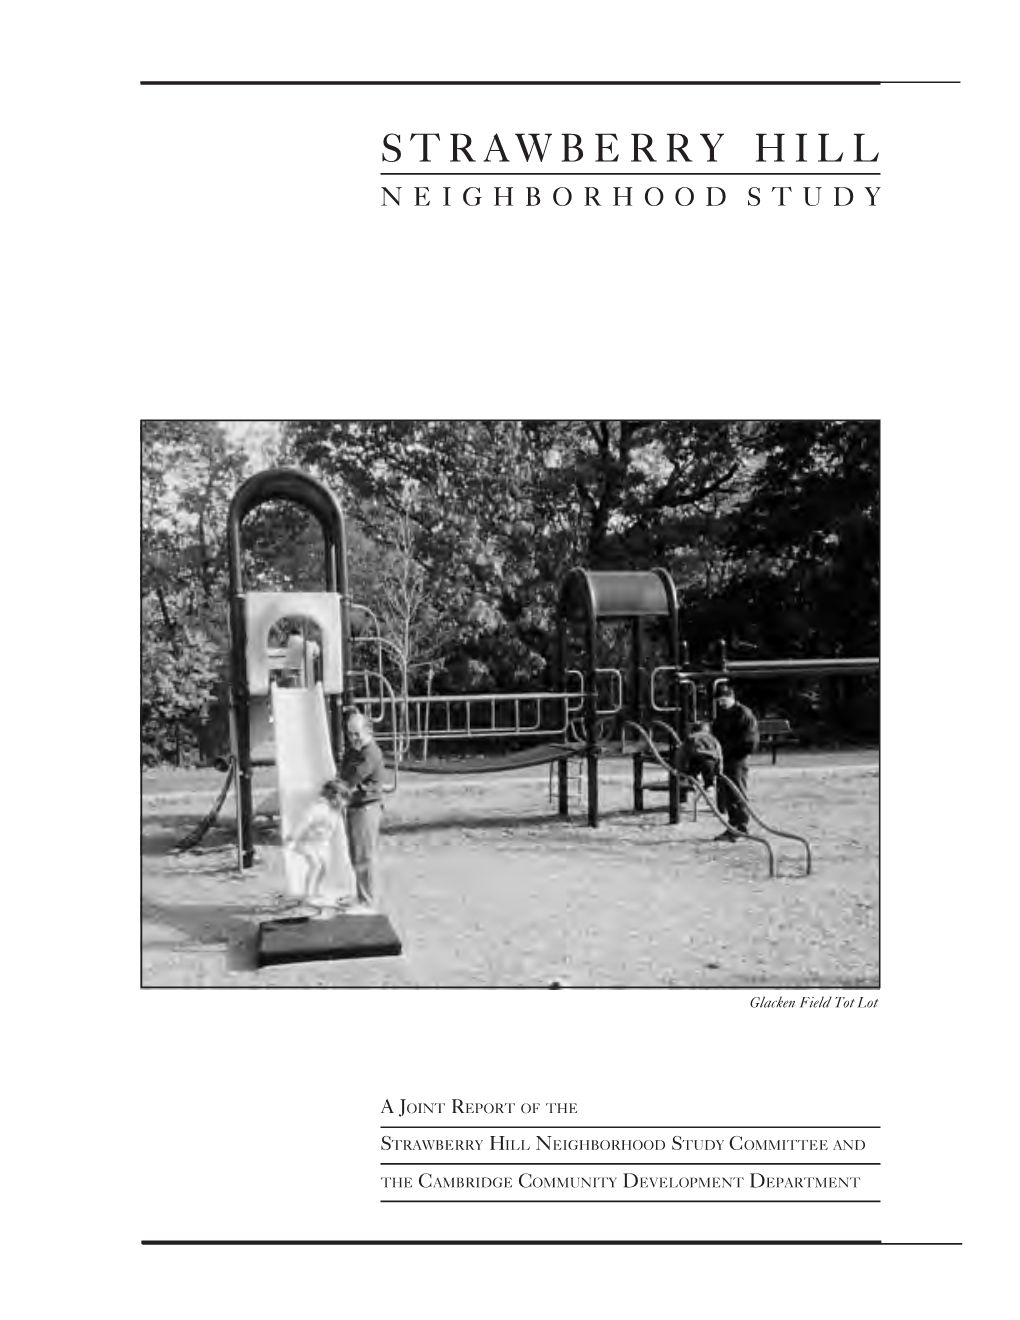 Strawberry Hill Neighborhood Study 1999